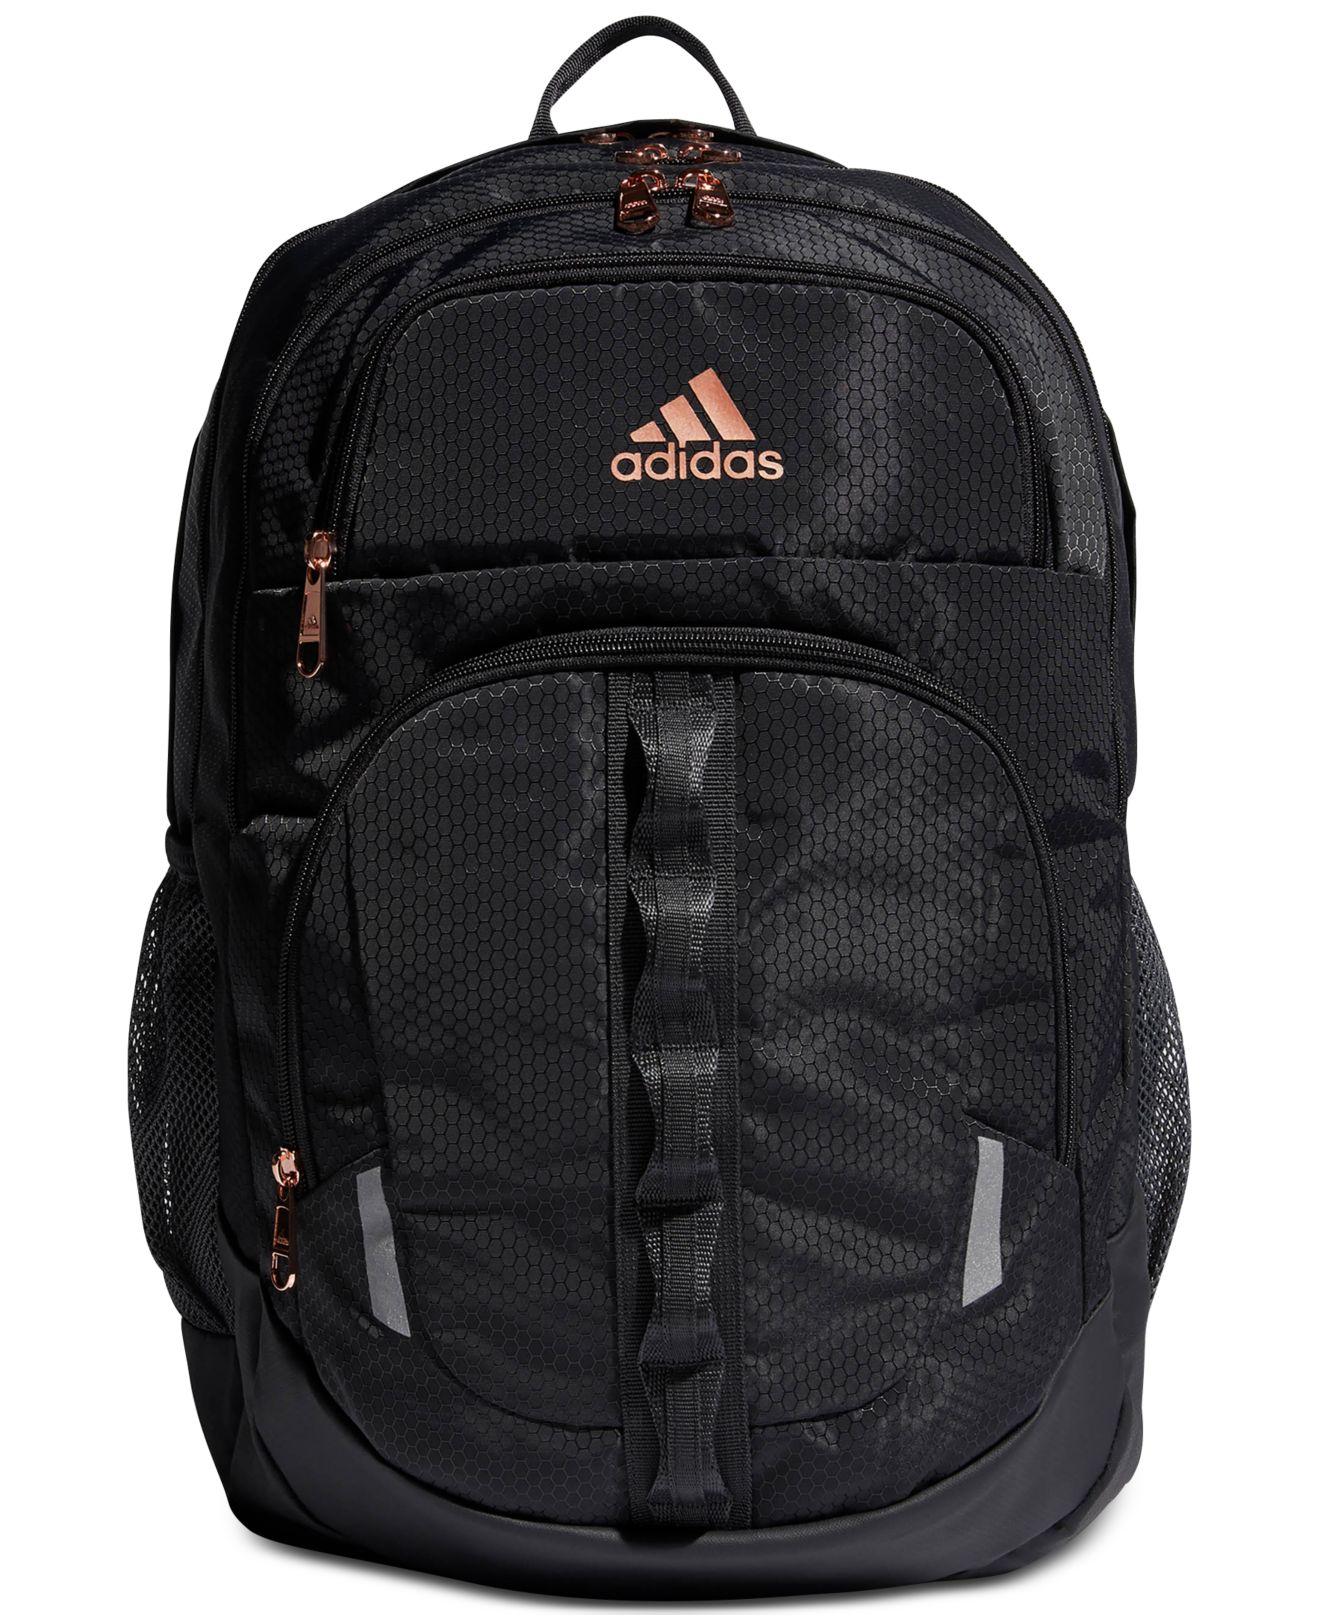 Beige Adicolor backpack for men and women - ADIDAS ORIGINALS - Pavidas